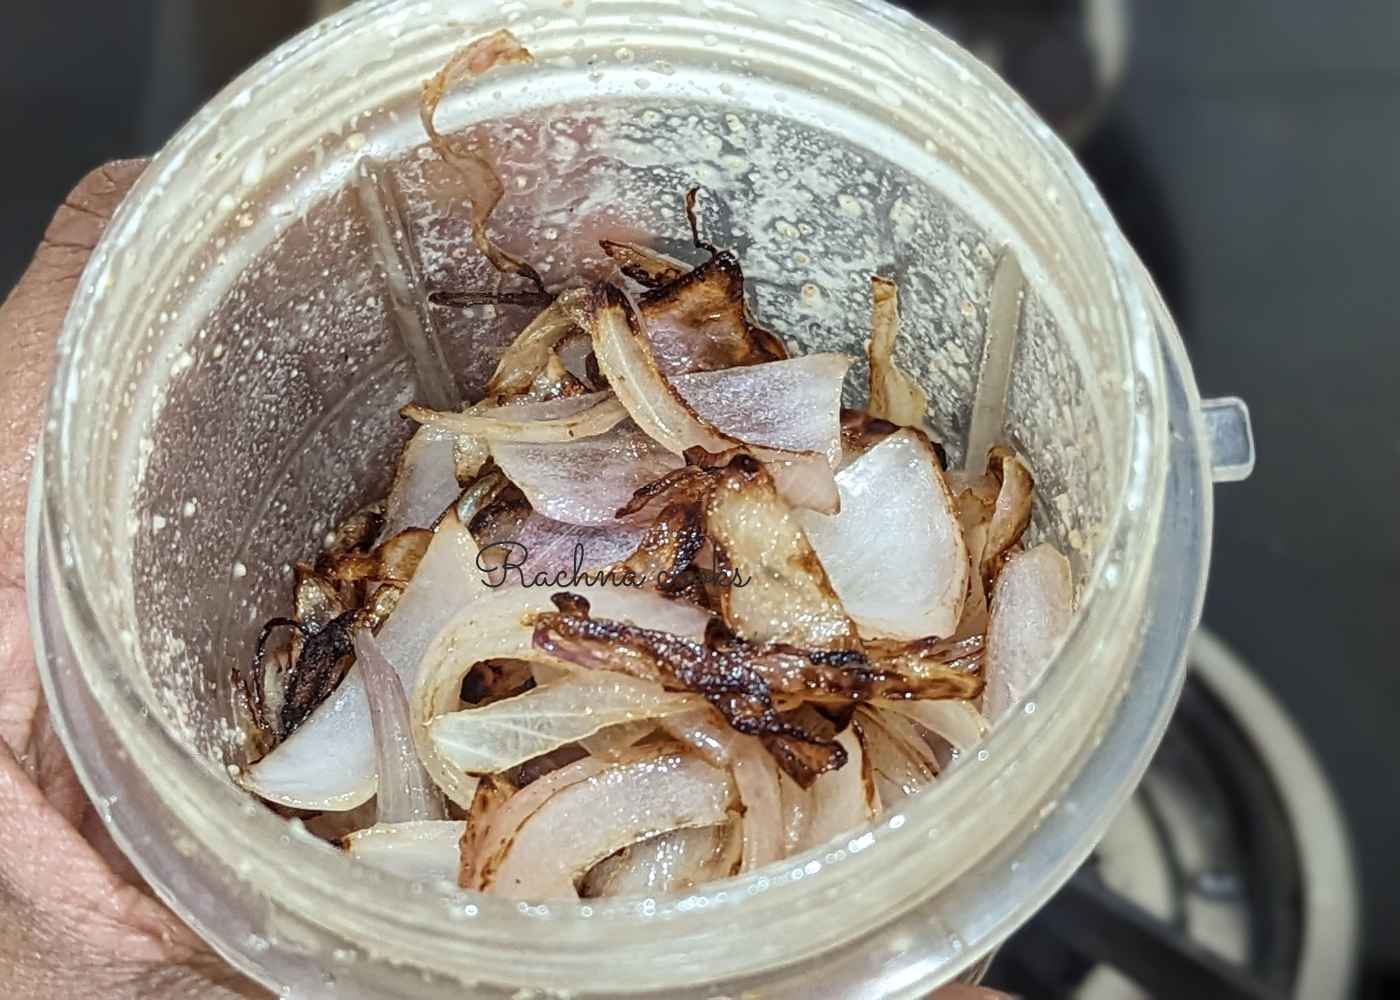 Sauteed onions in blender jar